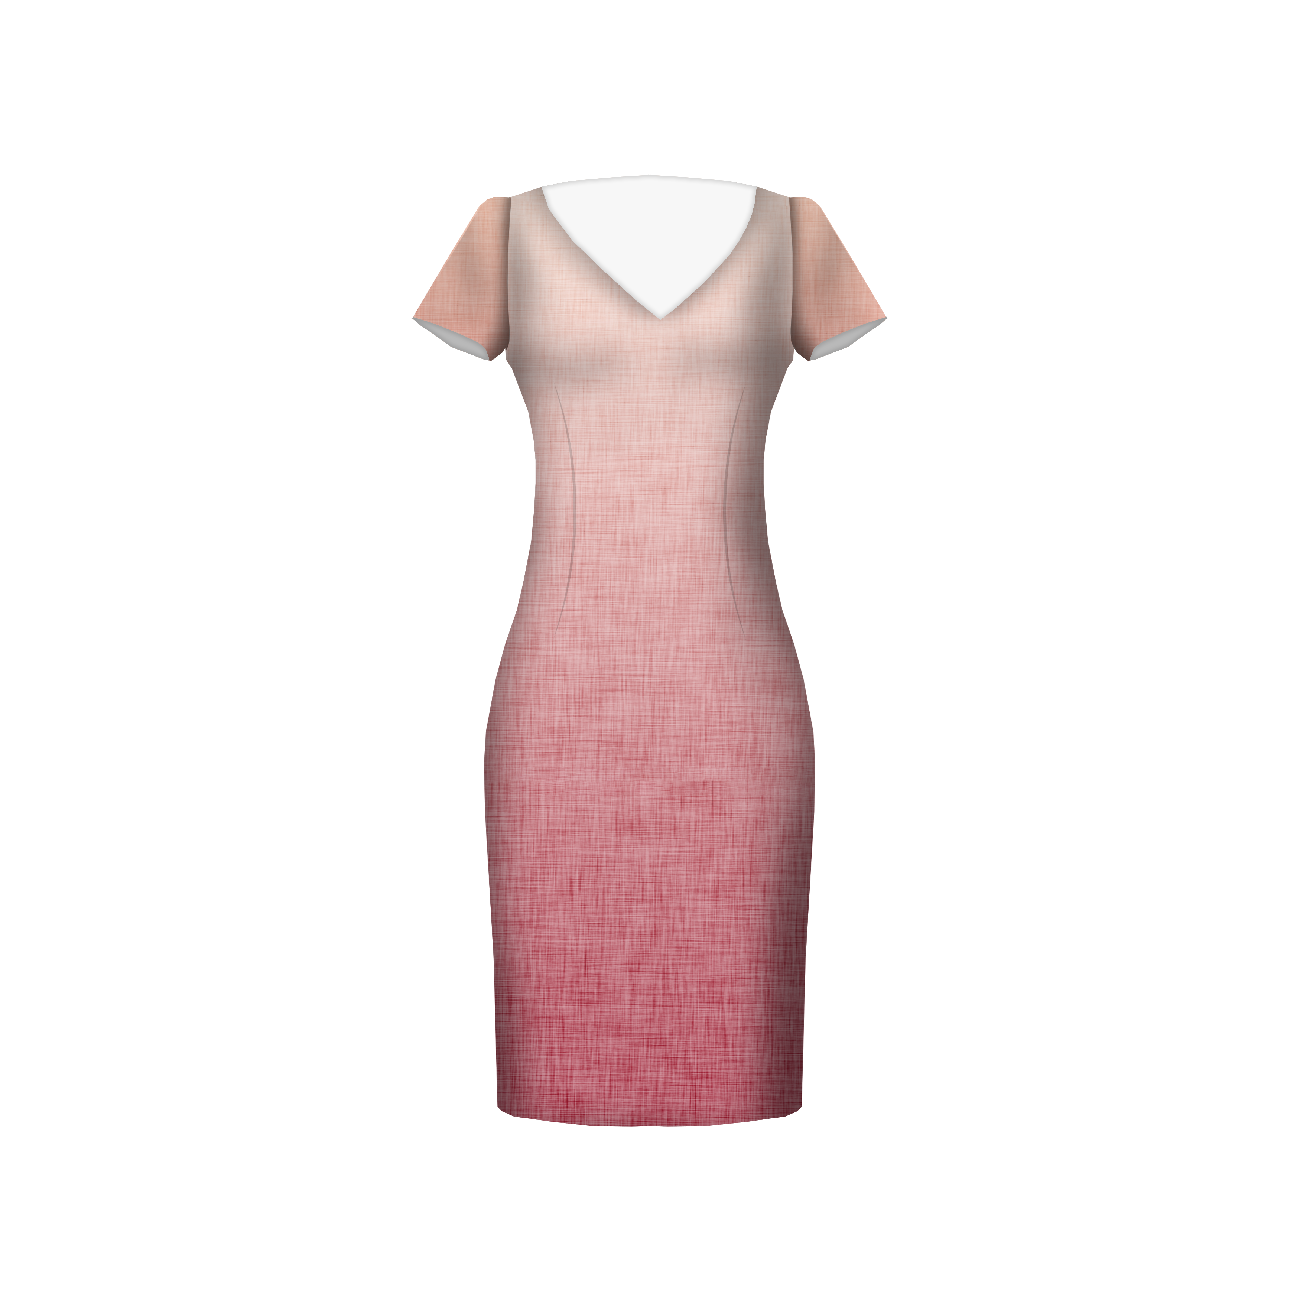 OMBRE / ACID WASH - fuchsia (pale pink) - dress panel Linen 100%